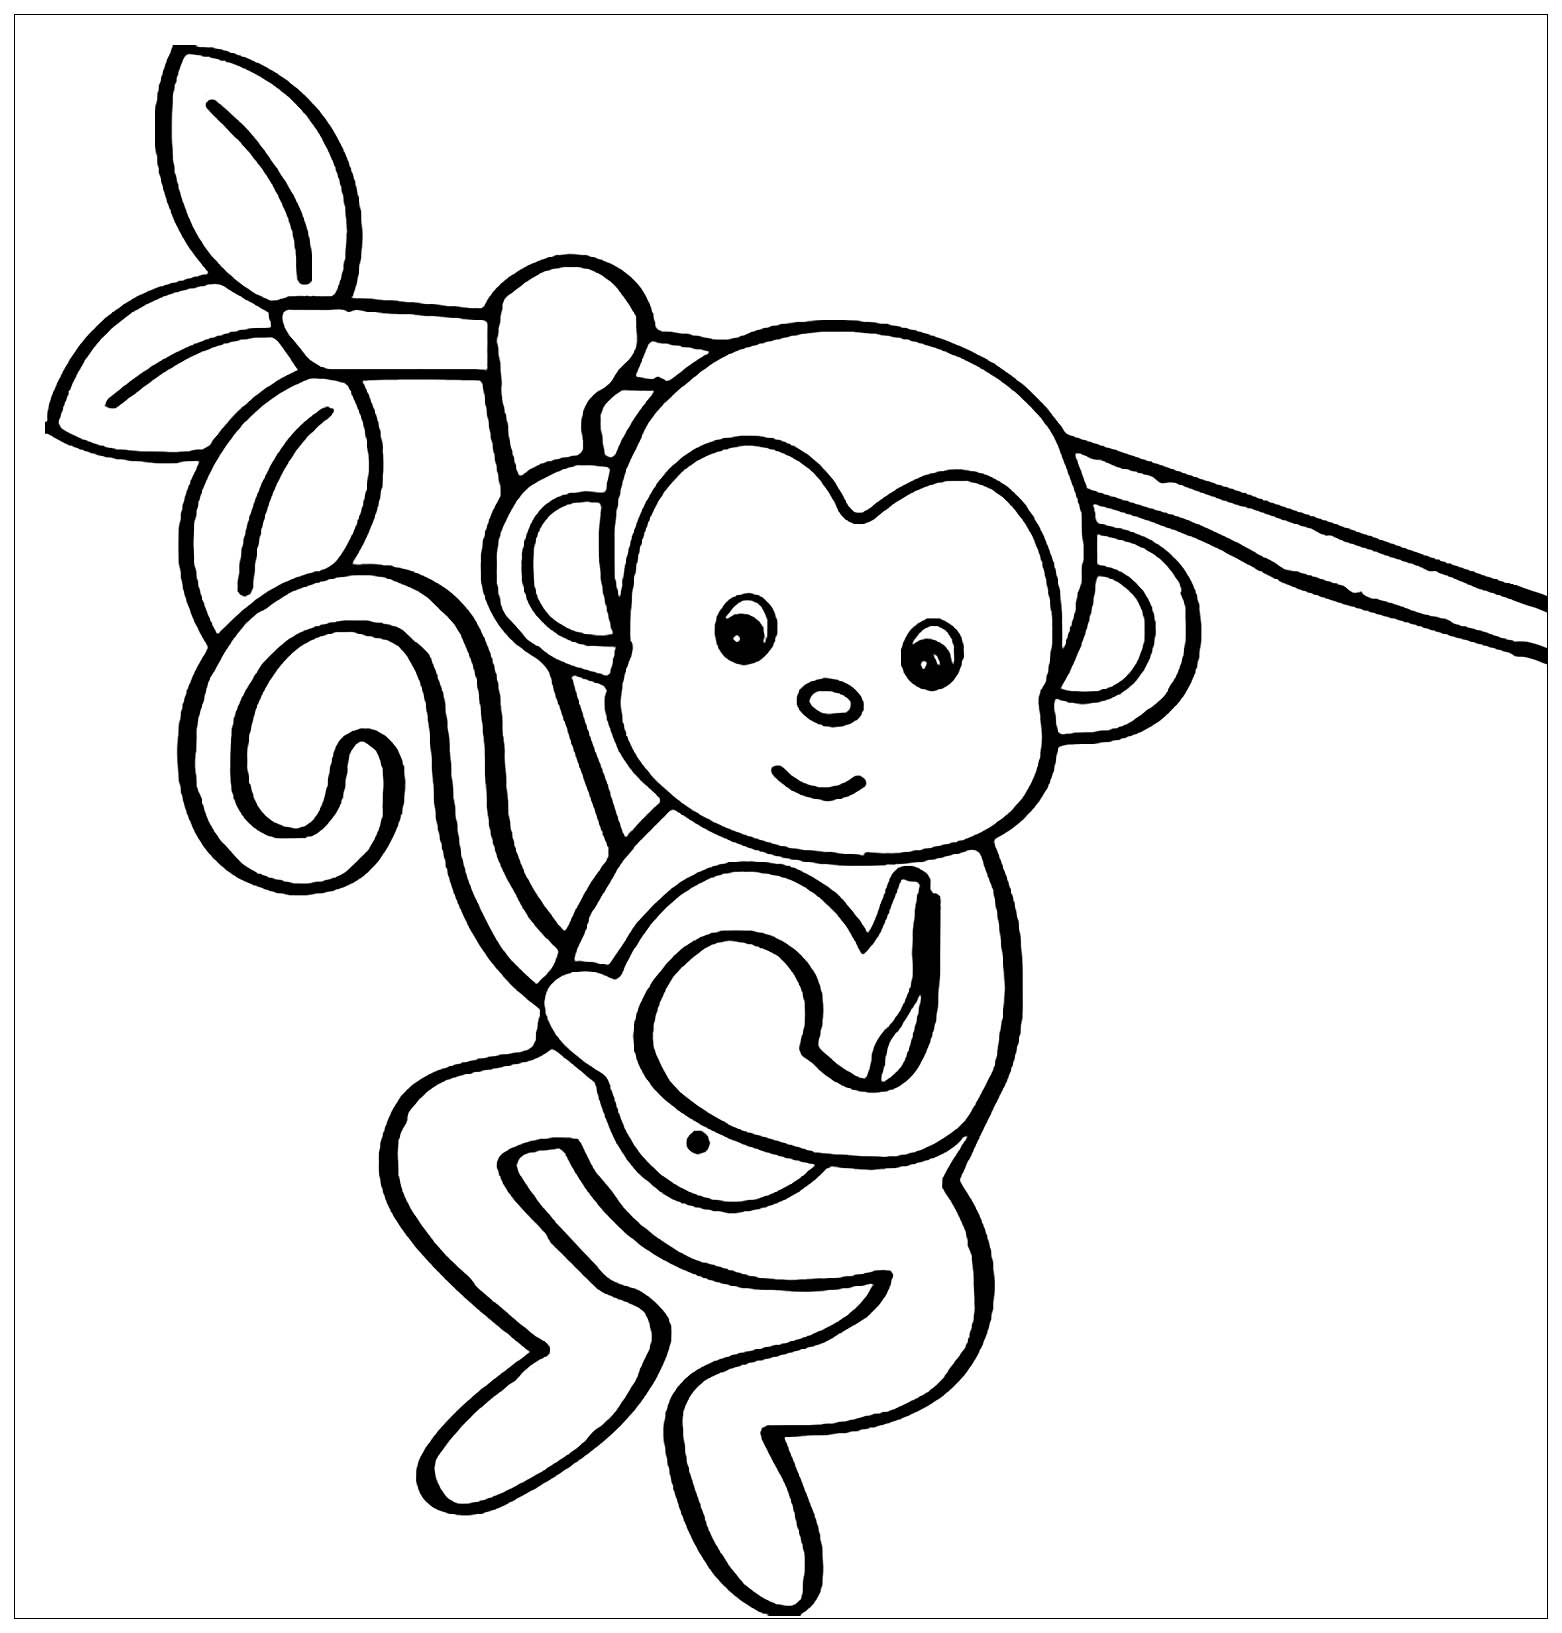 Download Monkeys to color for children - Monkeys Kids Coloring Pages